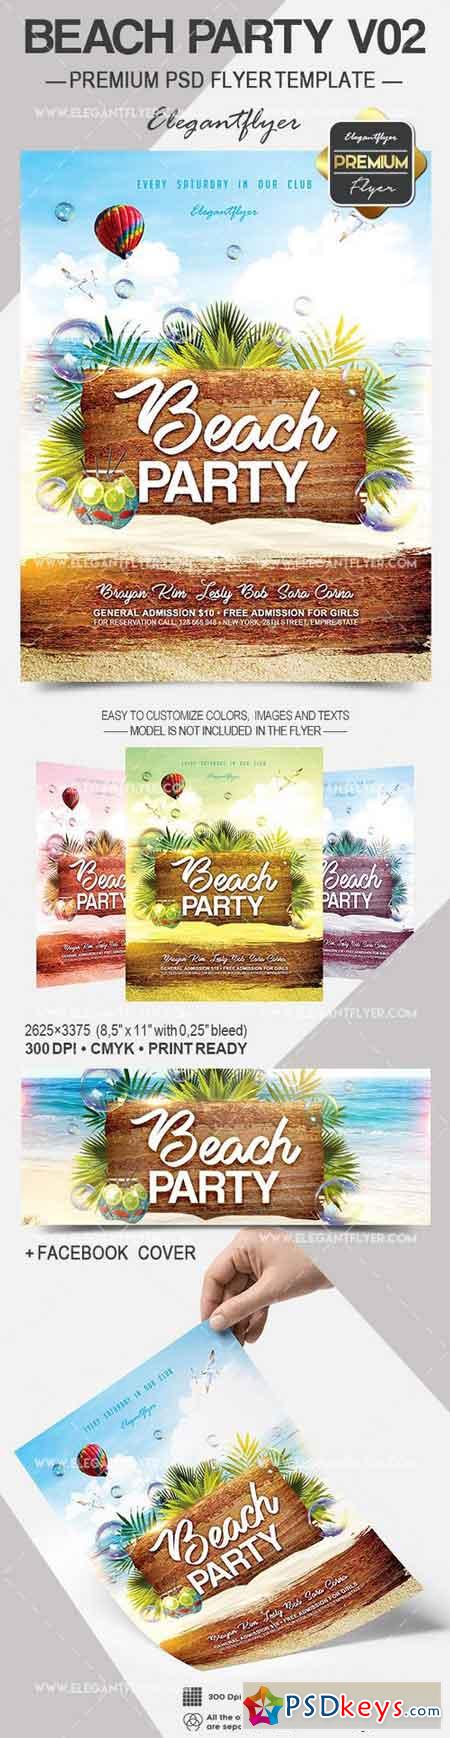 Beach Party V02  Flyer PSD Template + Facebook Cover